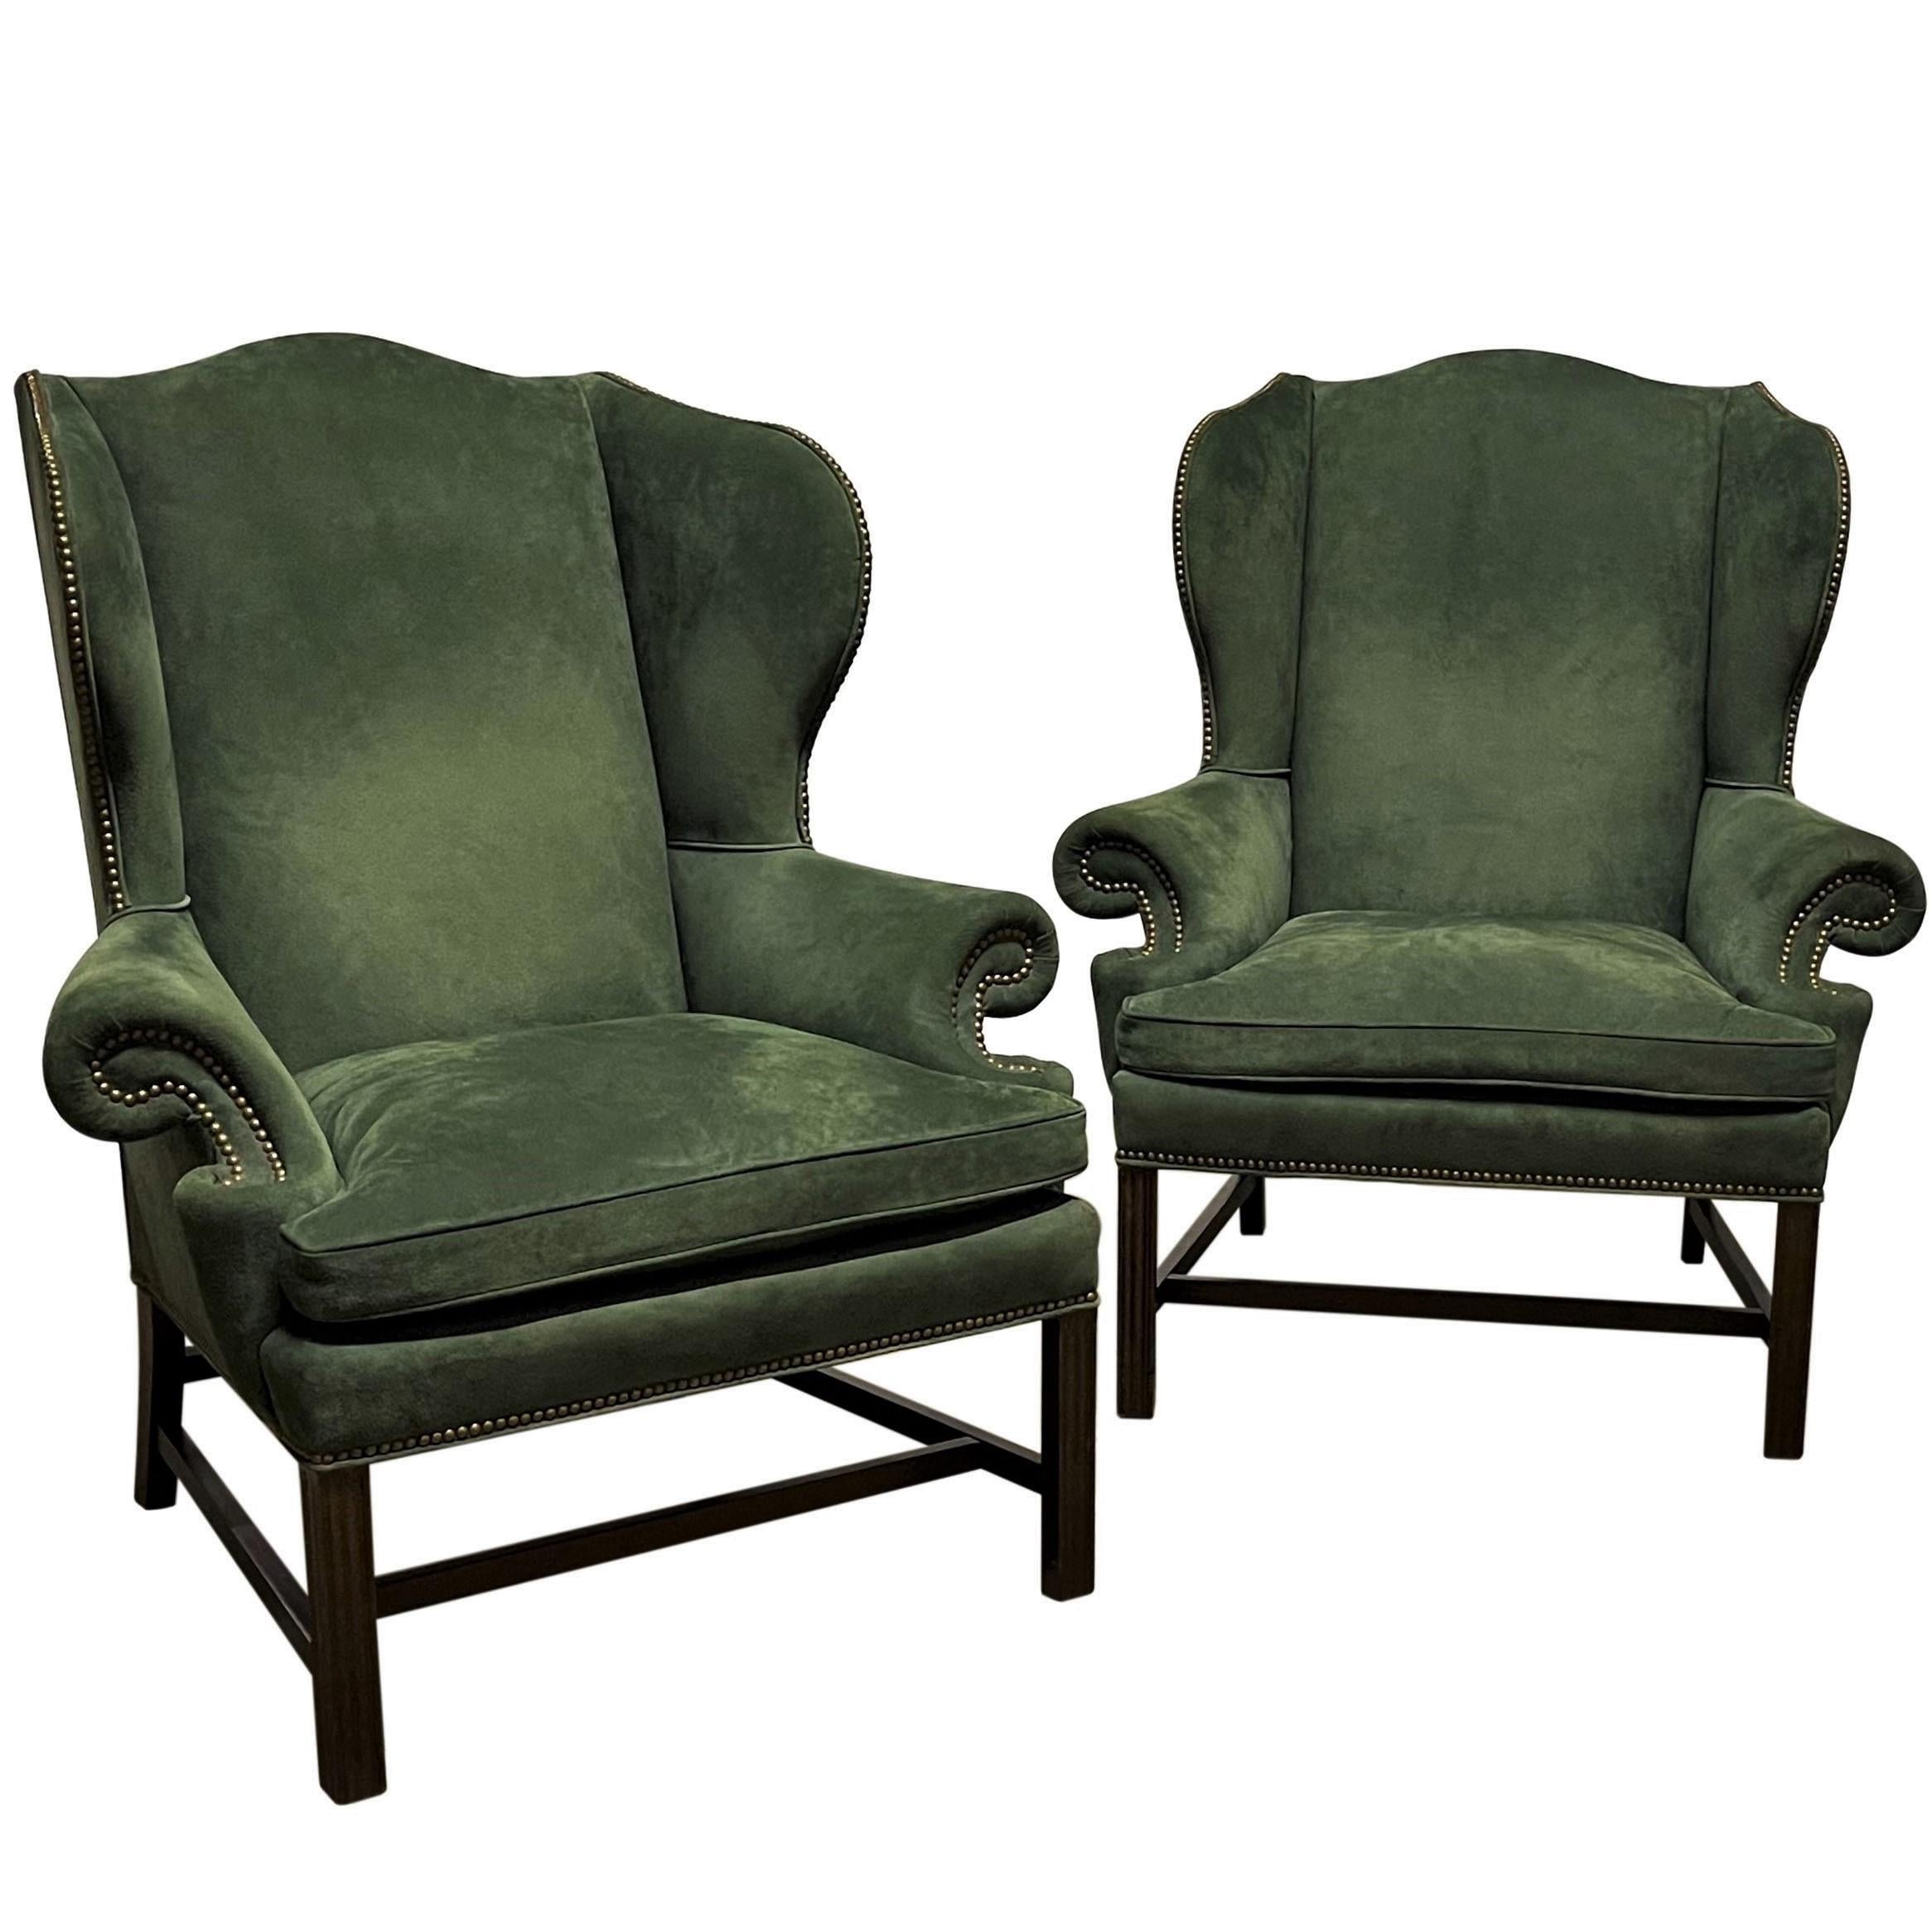 Pair of Georgian Green Suede Wingback Armchairs